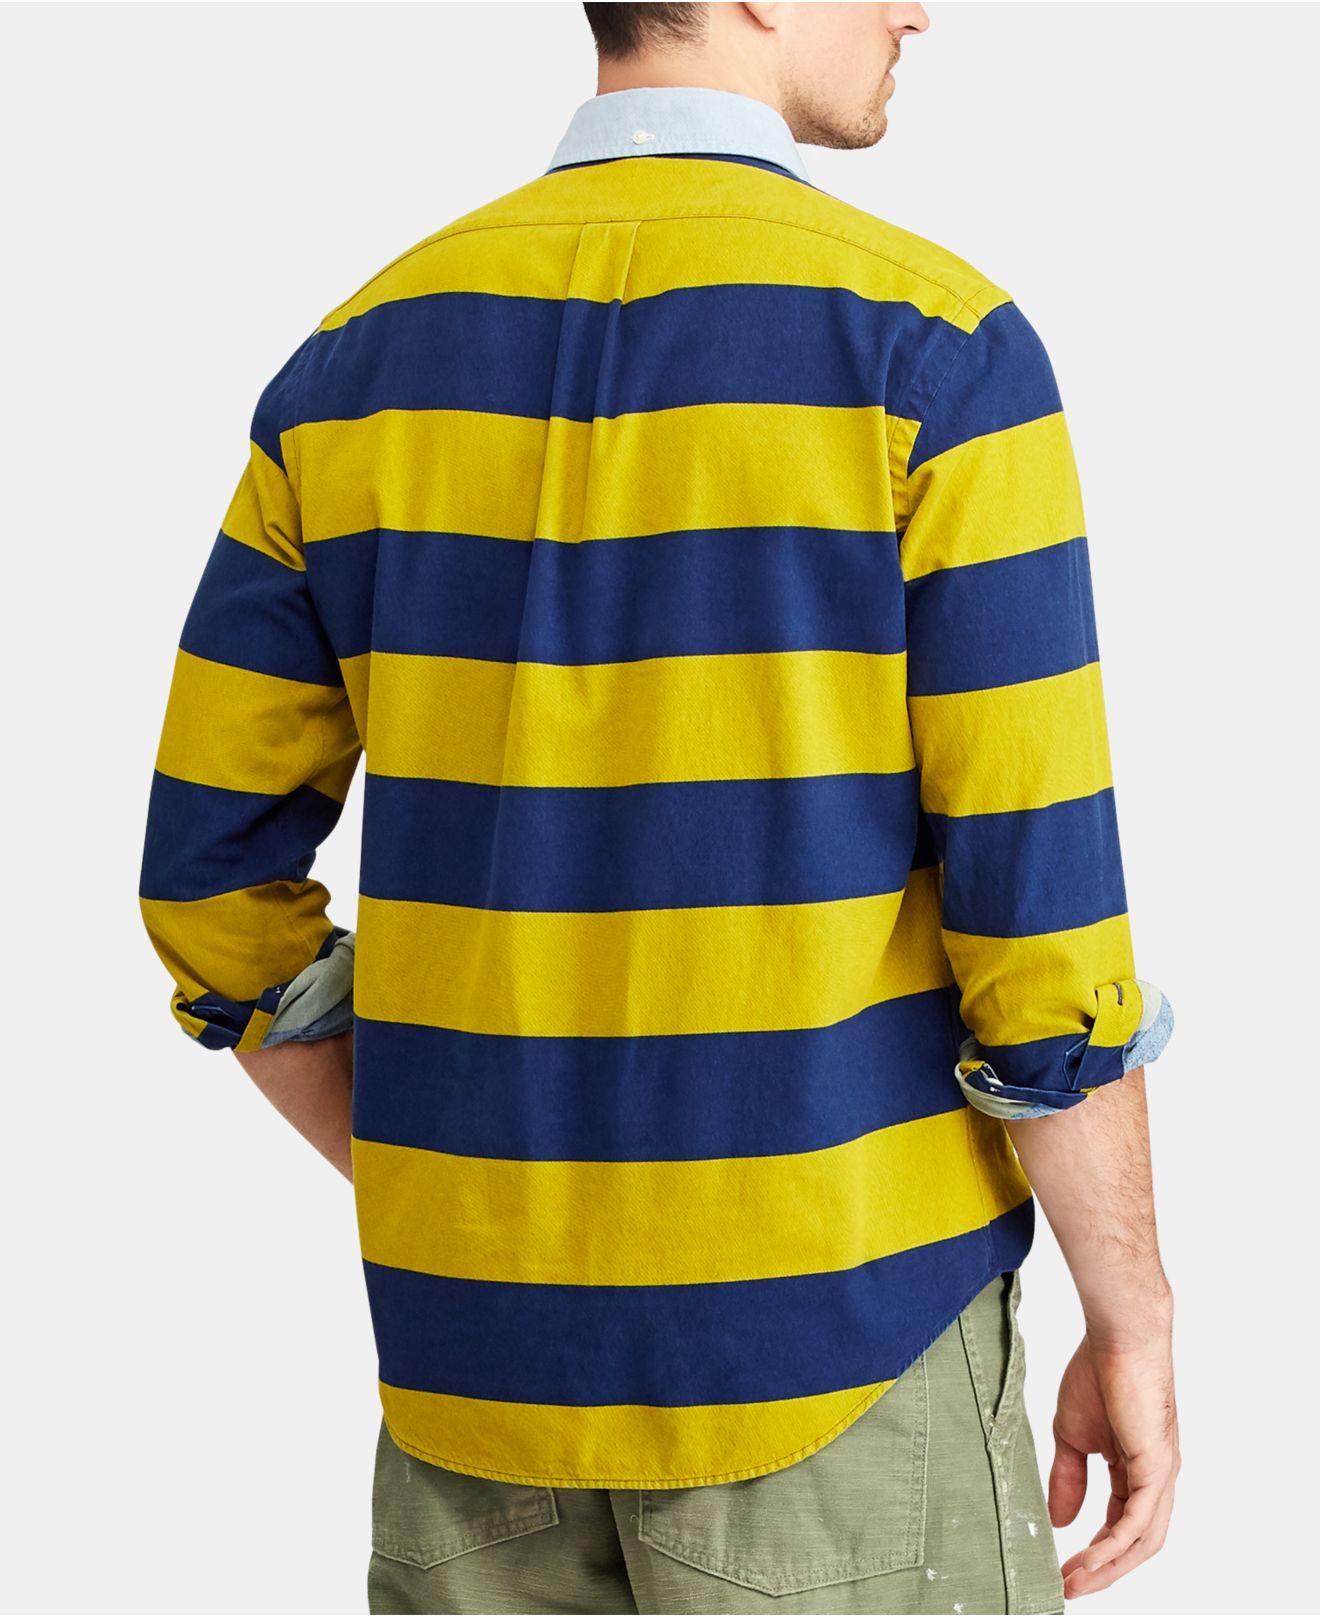 Polo Ralph Lauren Cotton Yale Tiger Patch Long-sleeve Woven Shirt 